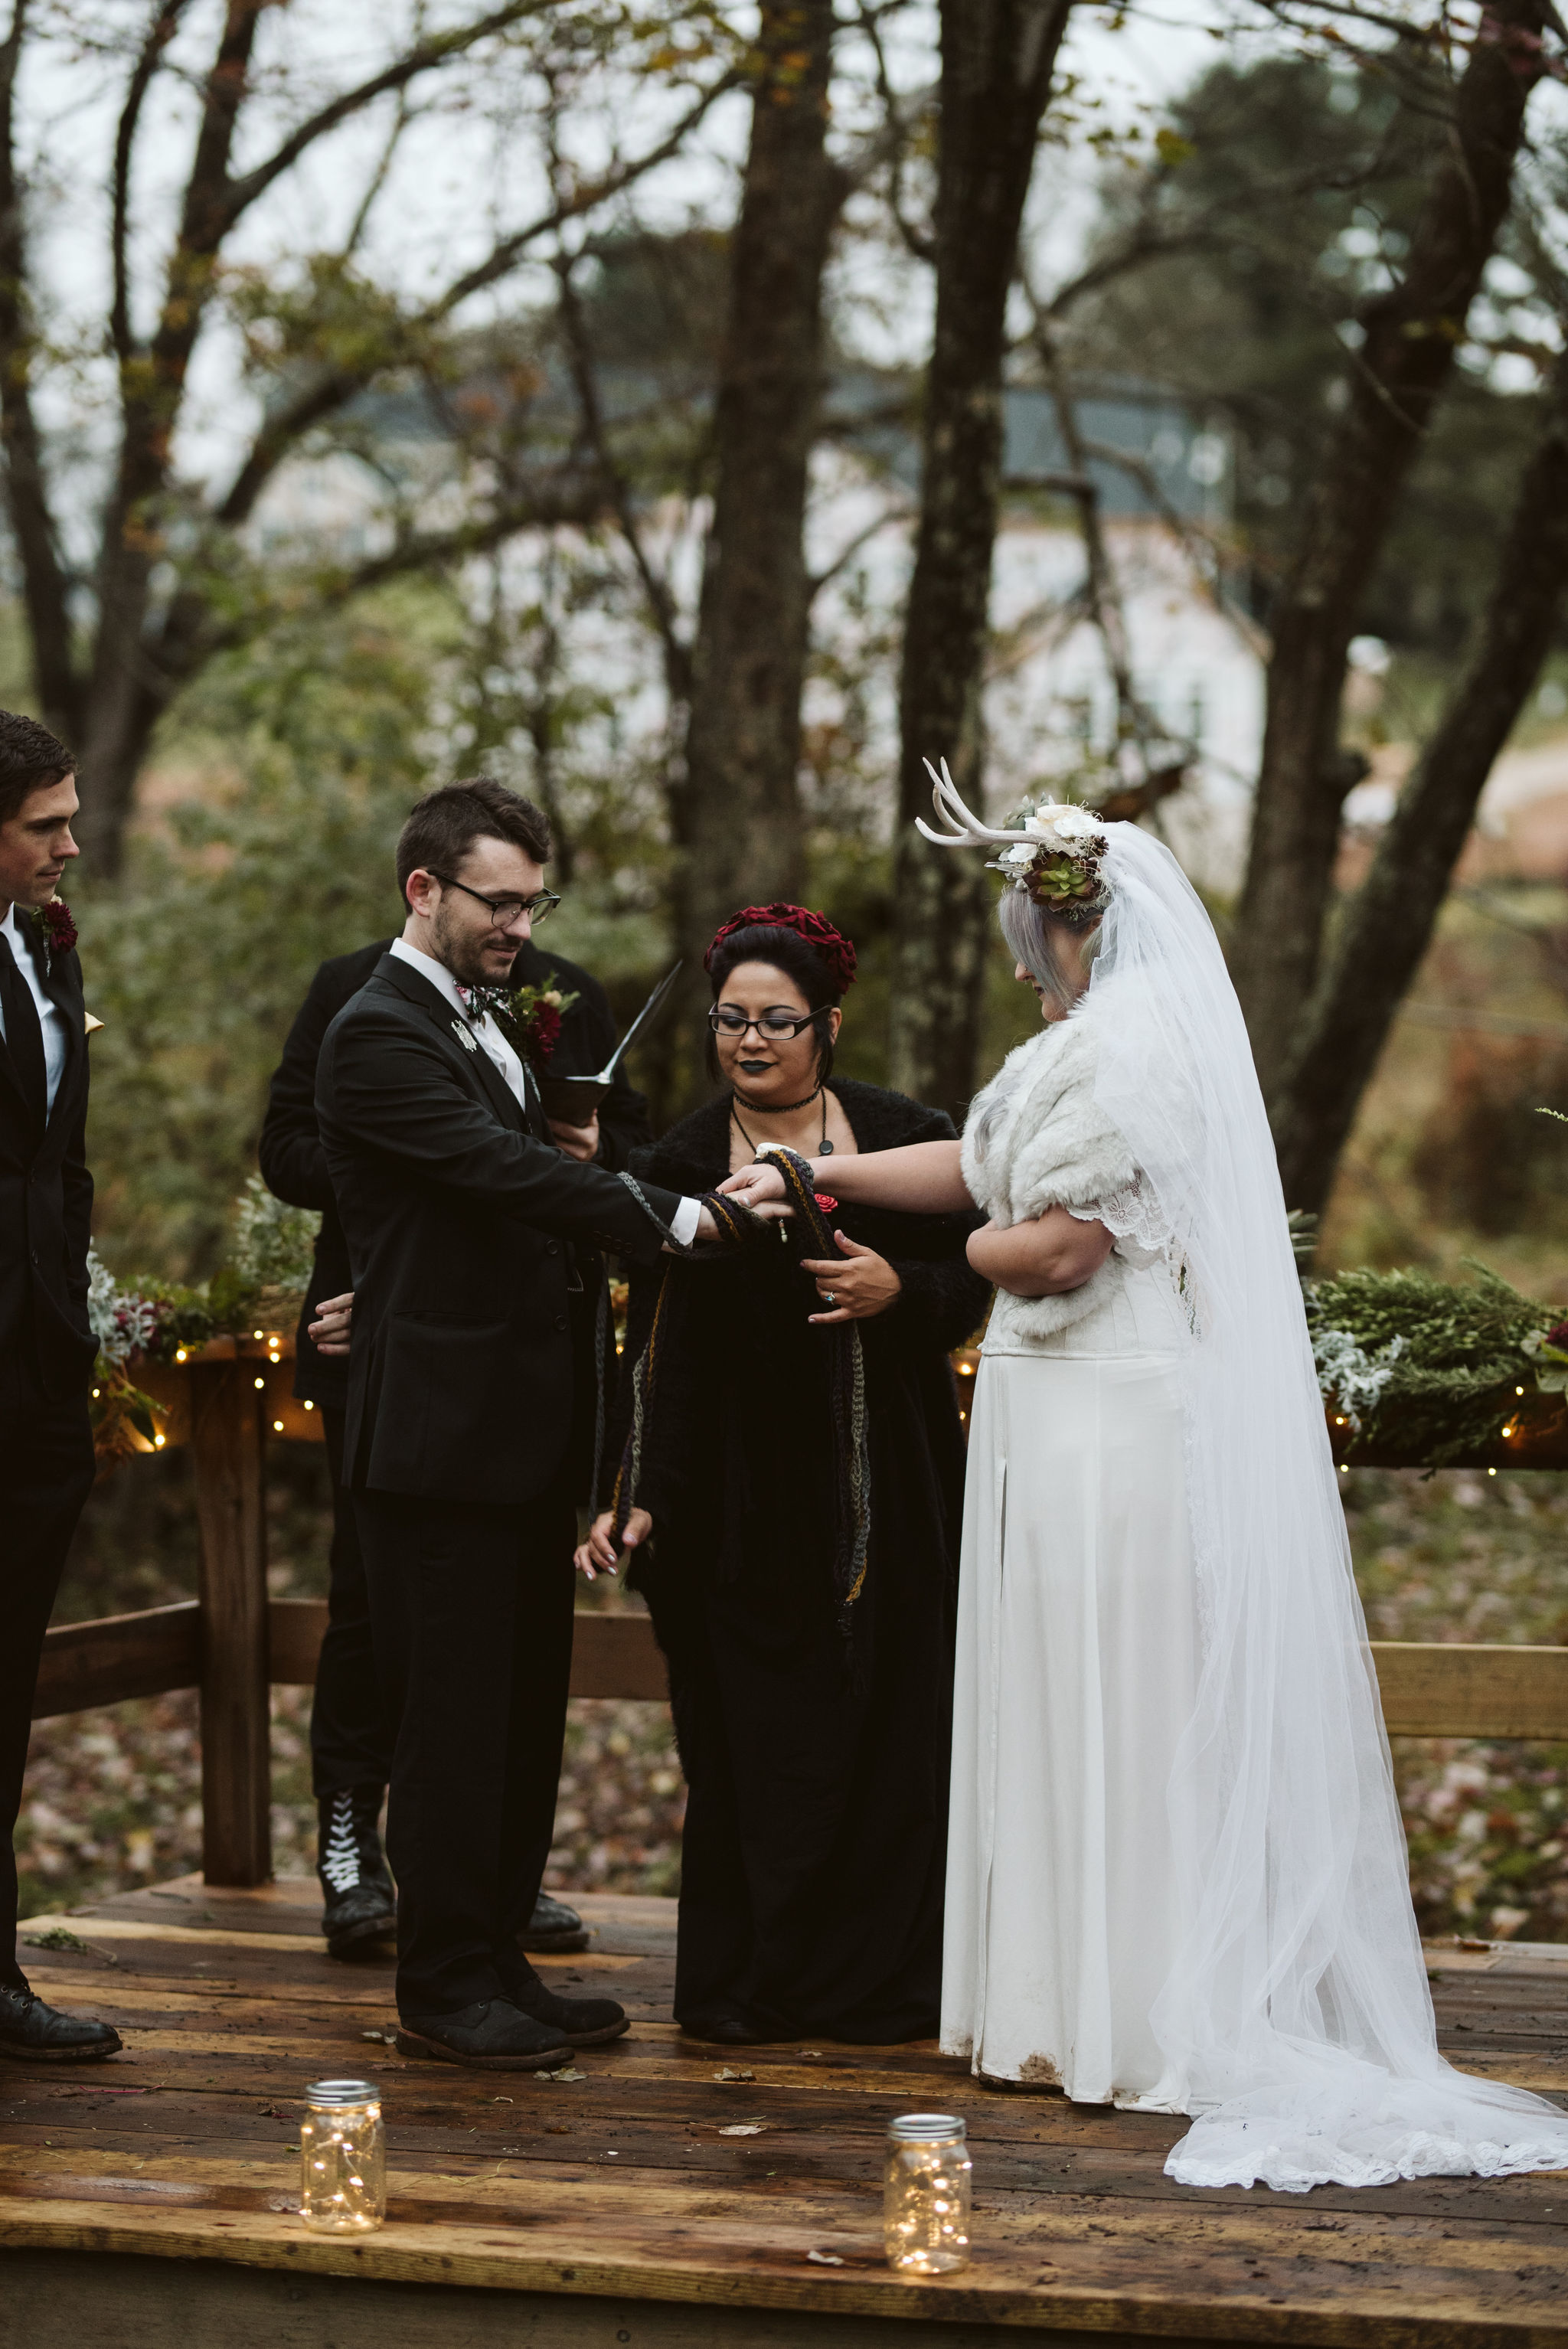  Maryland, Baltimore Wedding Photographer, Backyard Wedding, Fall, October, Dark Bohemian, Whimsical, Fun, Bride and Groom During Binding Ceremony 